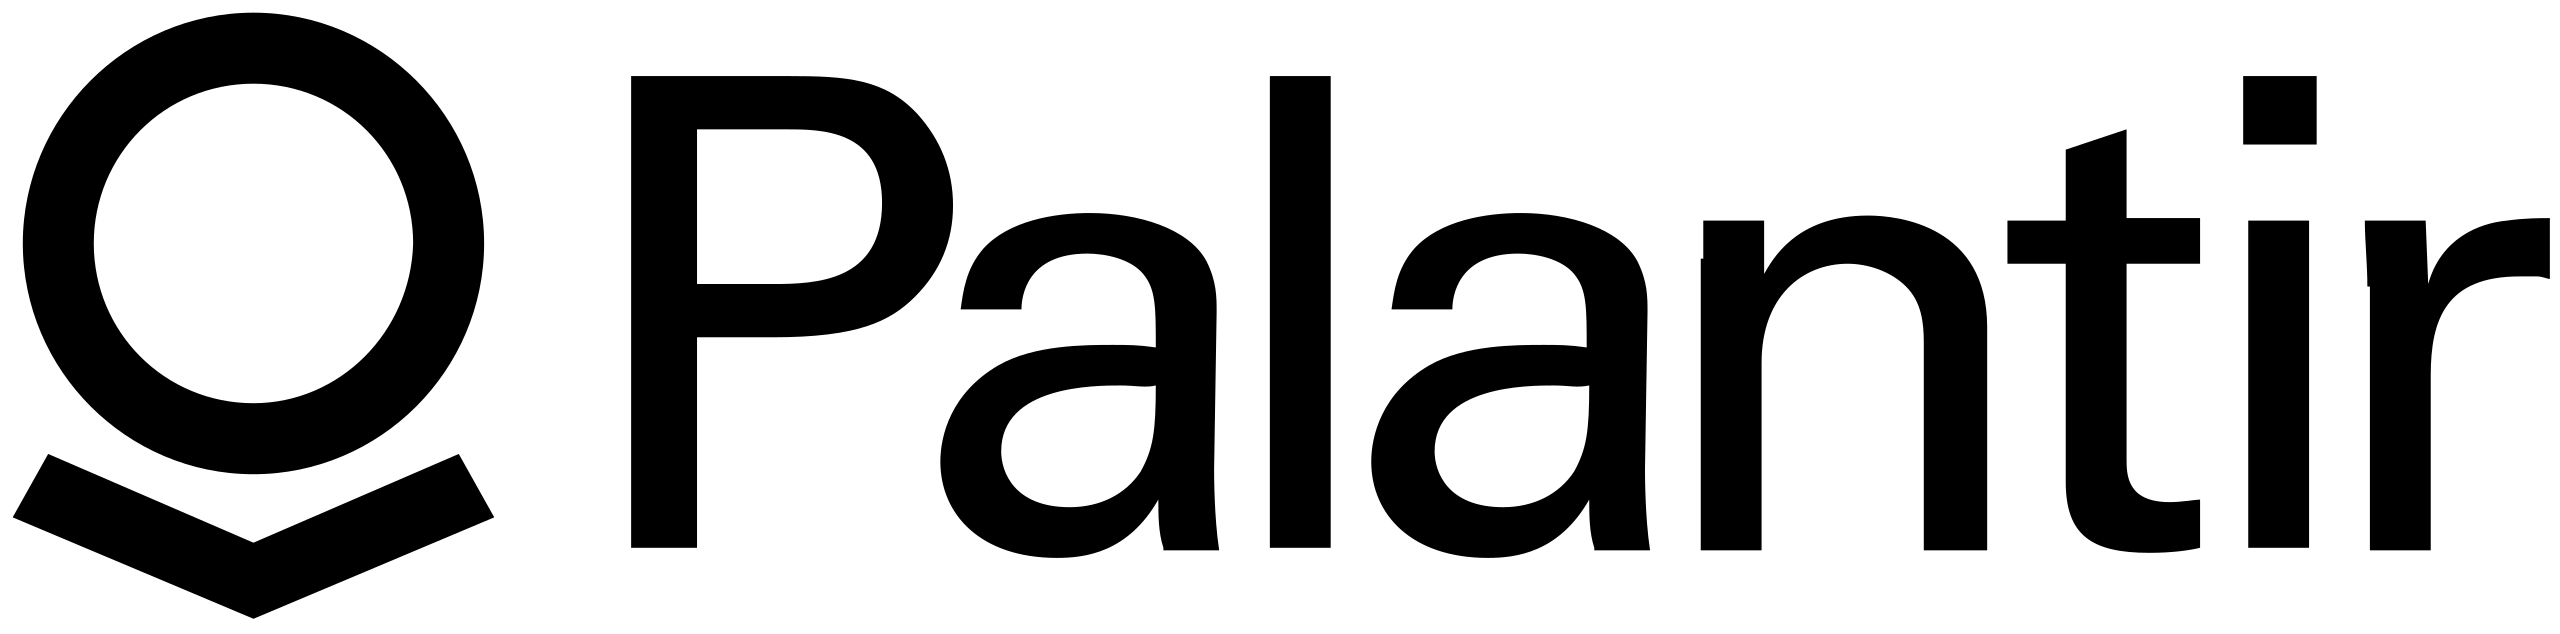 Palantir_Technologies_logo.svg